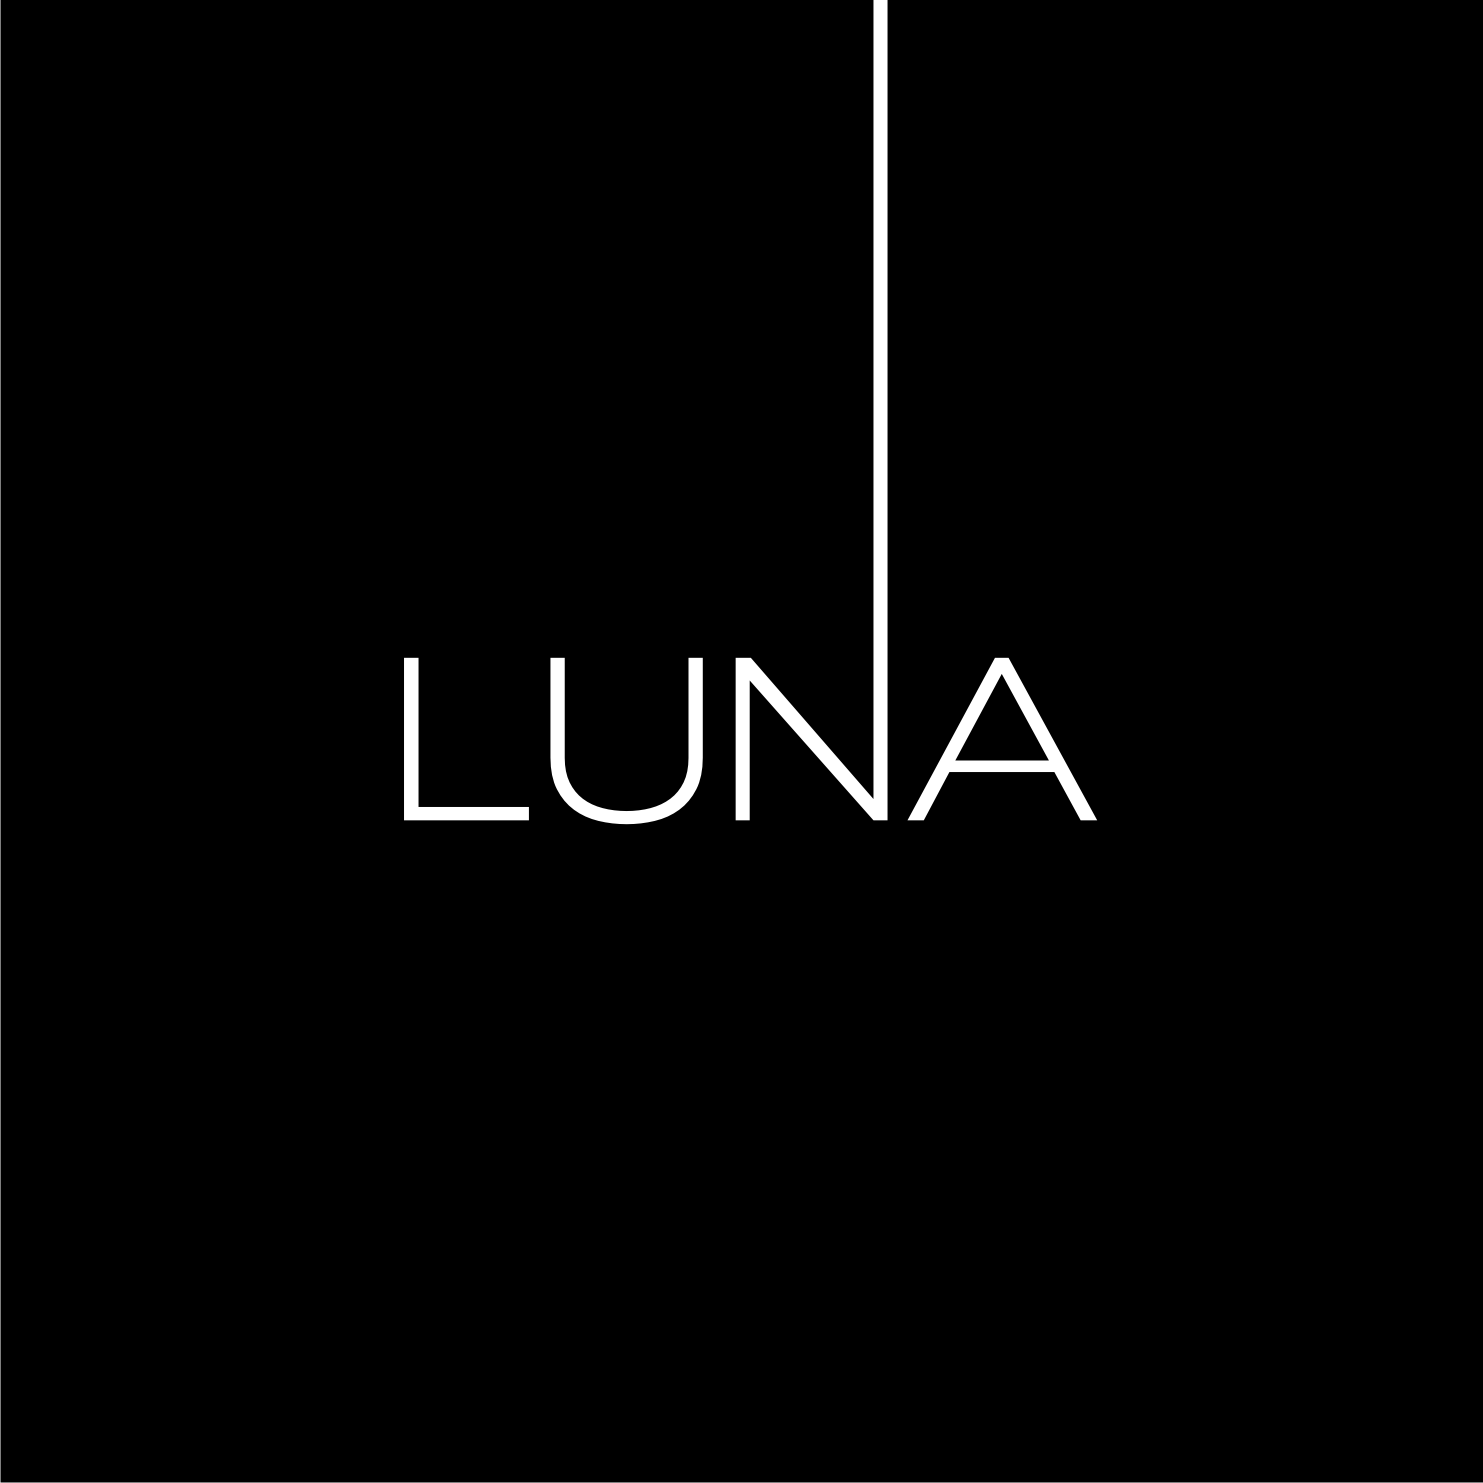 Luna Logo - Bold, Modern Logo Design for LUNA by abdulrahimazka | Design #13453039